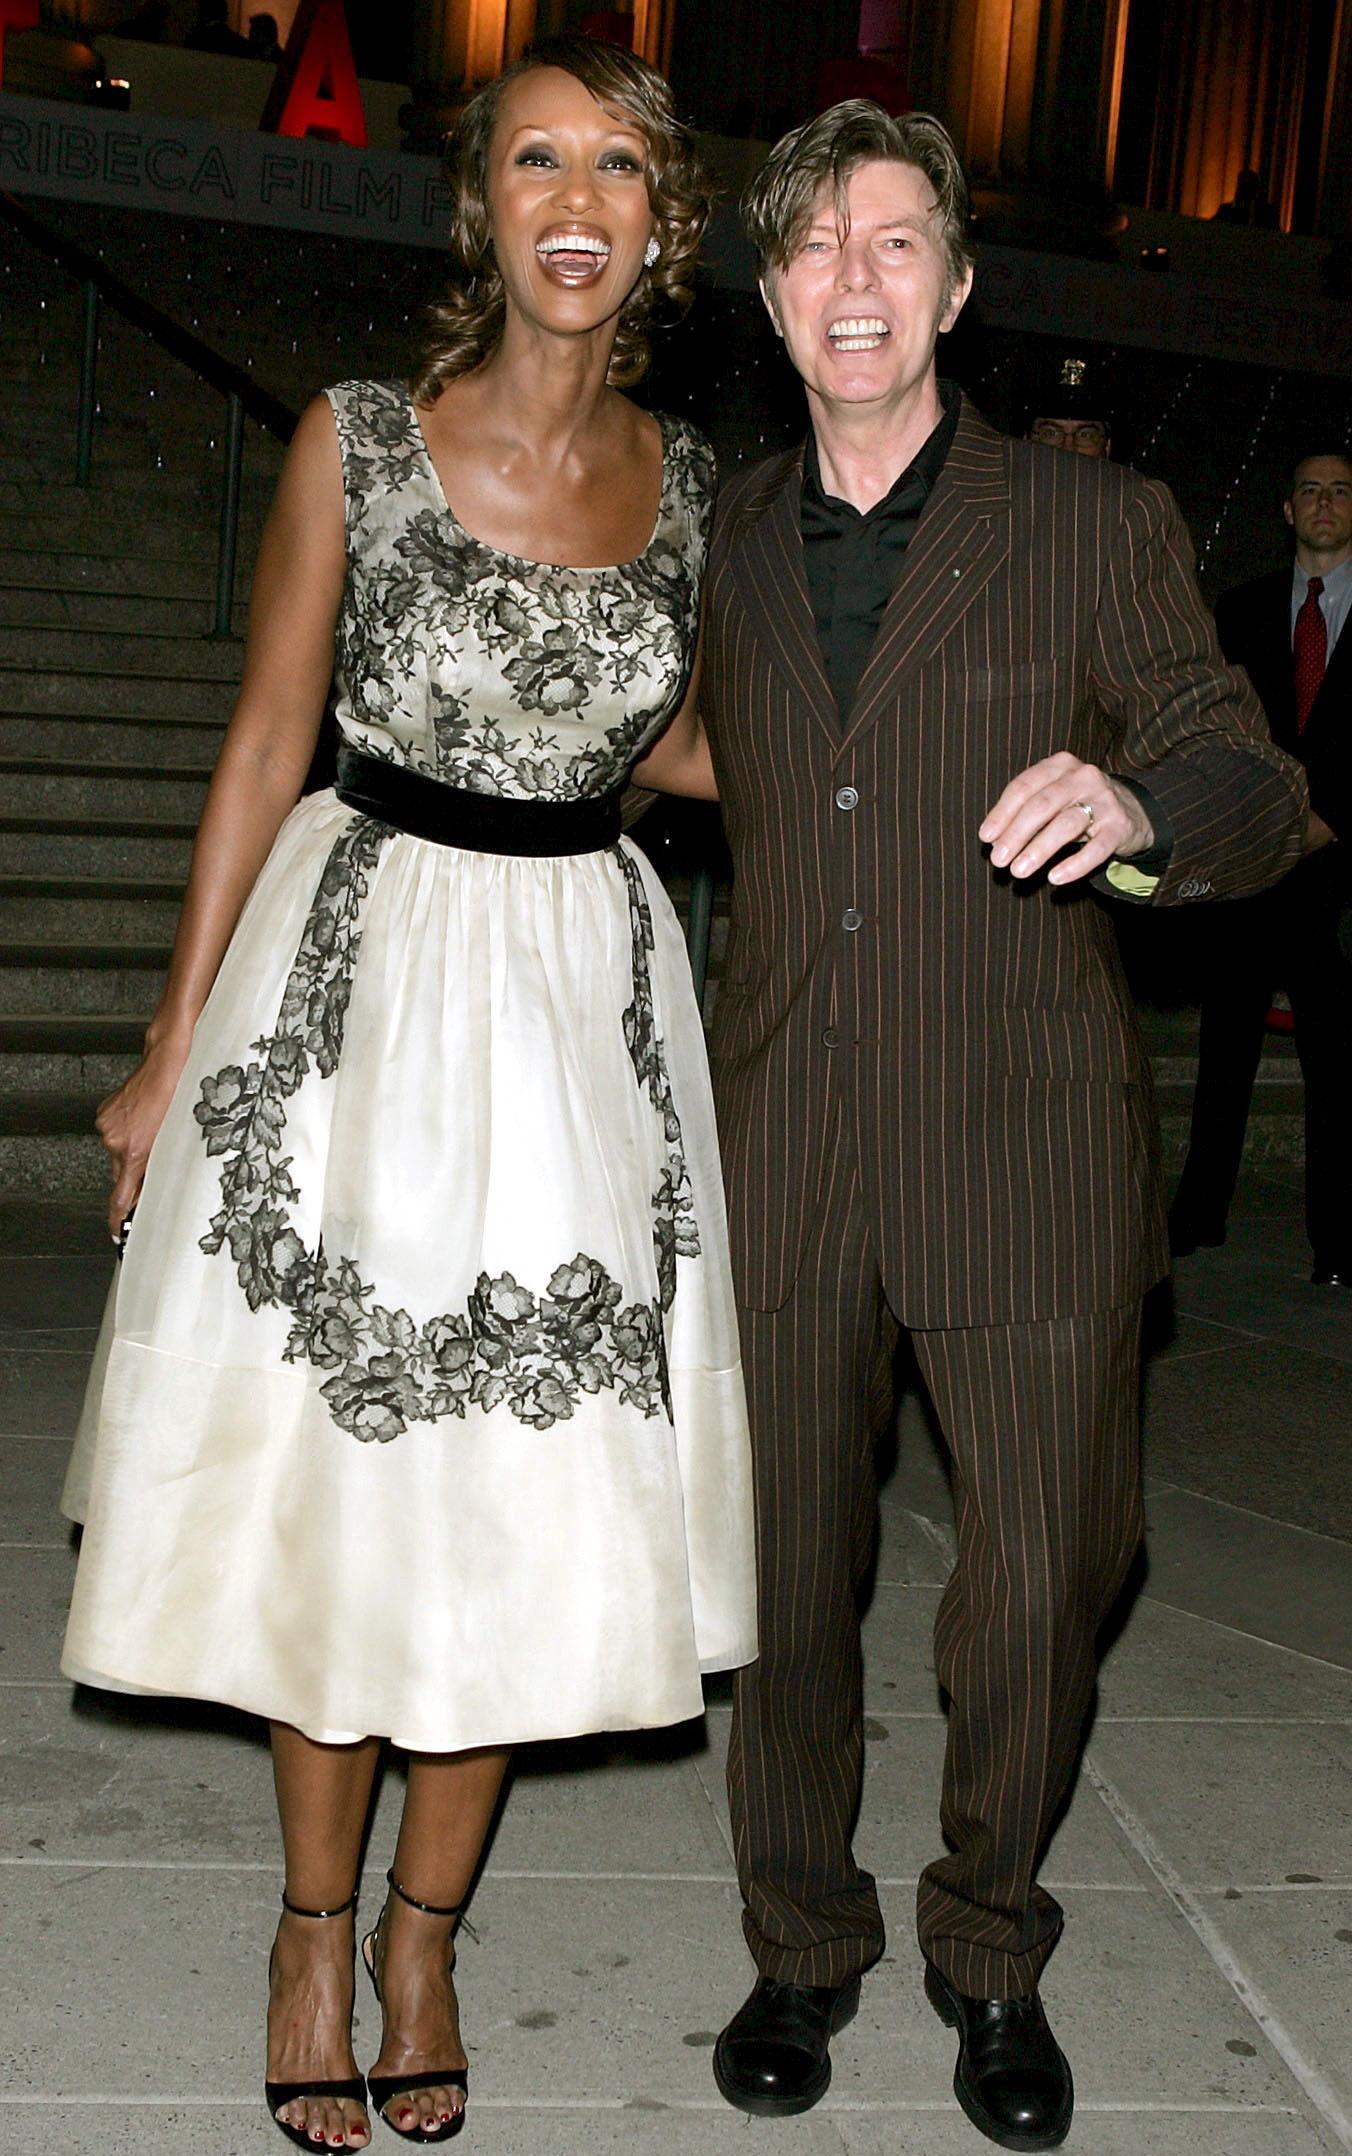 STRÅLENDE: David Bowie og Iman ankommer Vanity Fair-festen i 2005 med store smil. Foto: NTB Scanpix